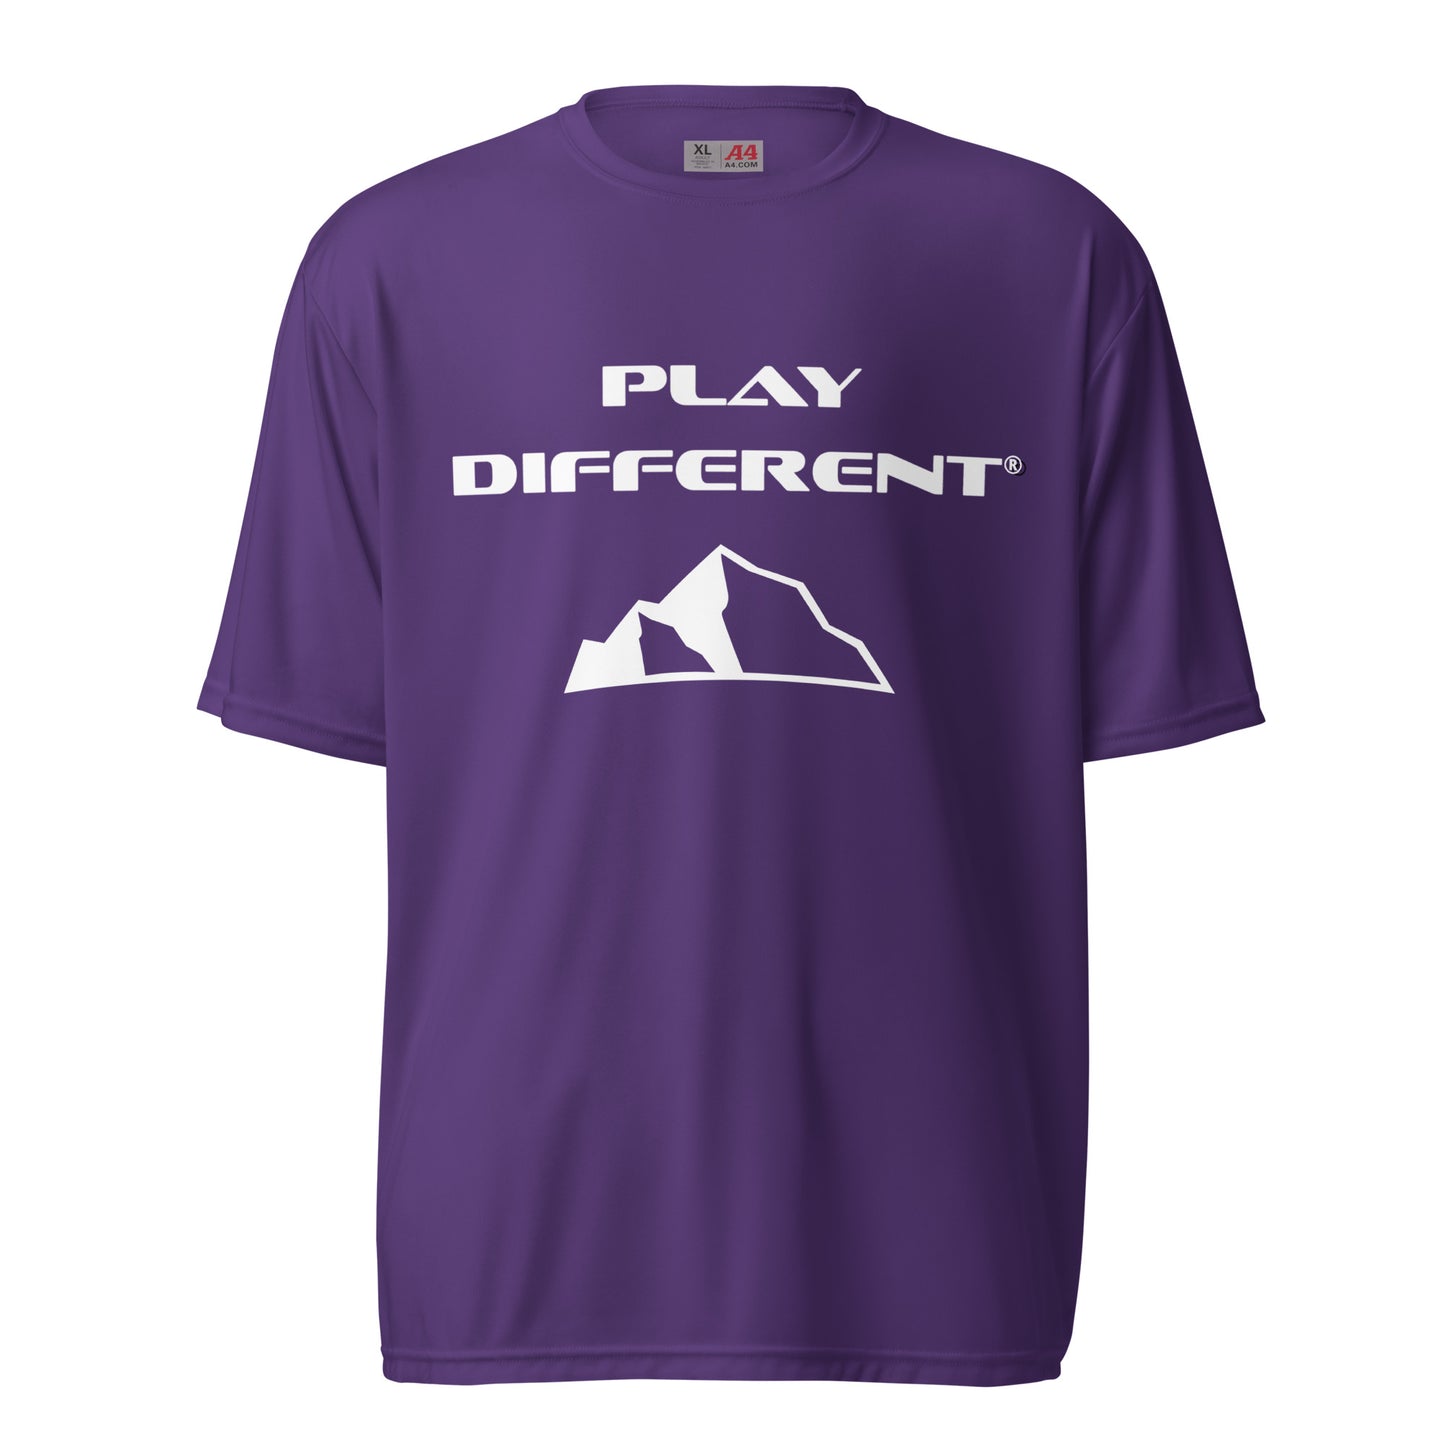 Play Different® Unisex performance crew neck t-shirt purple